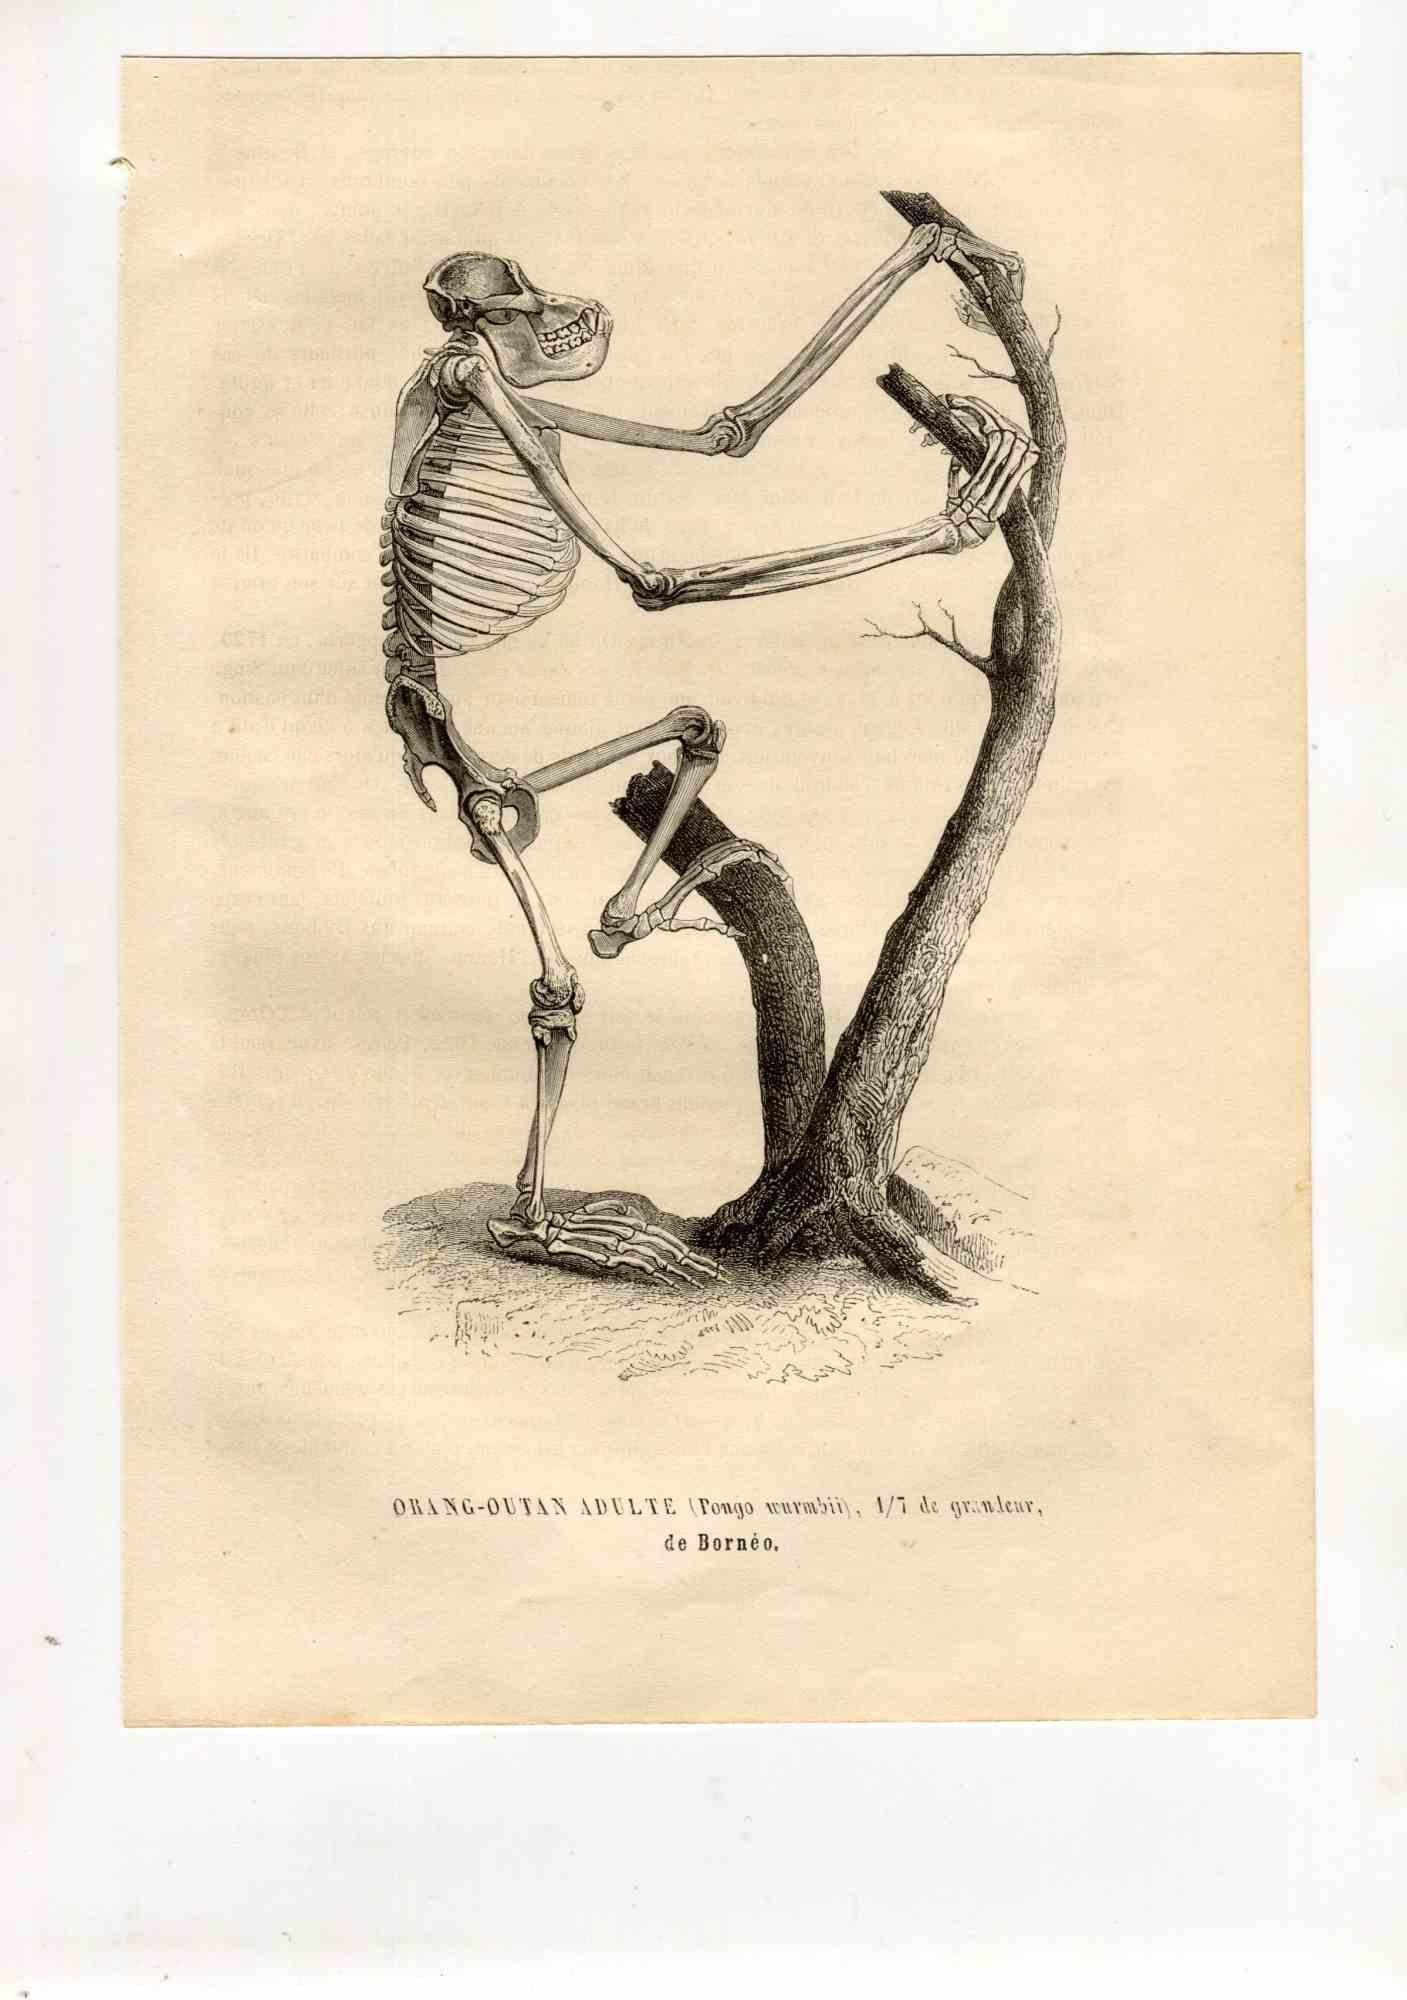 Orang-Outan - Lithograph by Paul Gervais - 1854